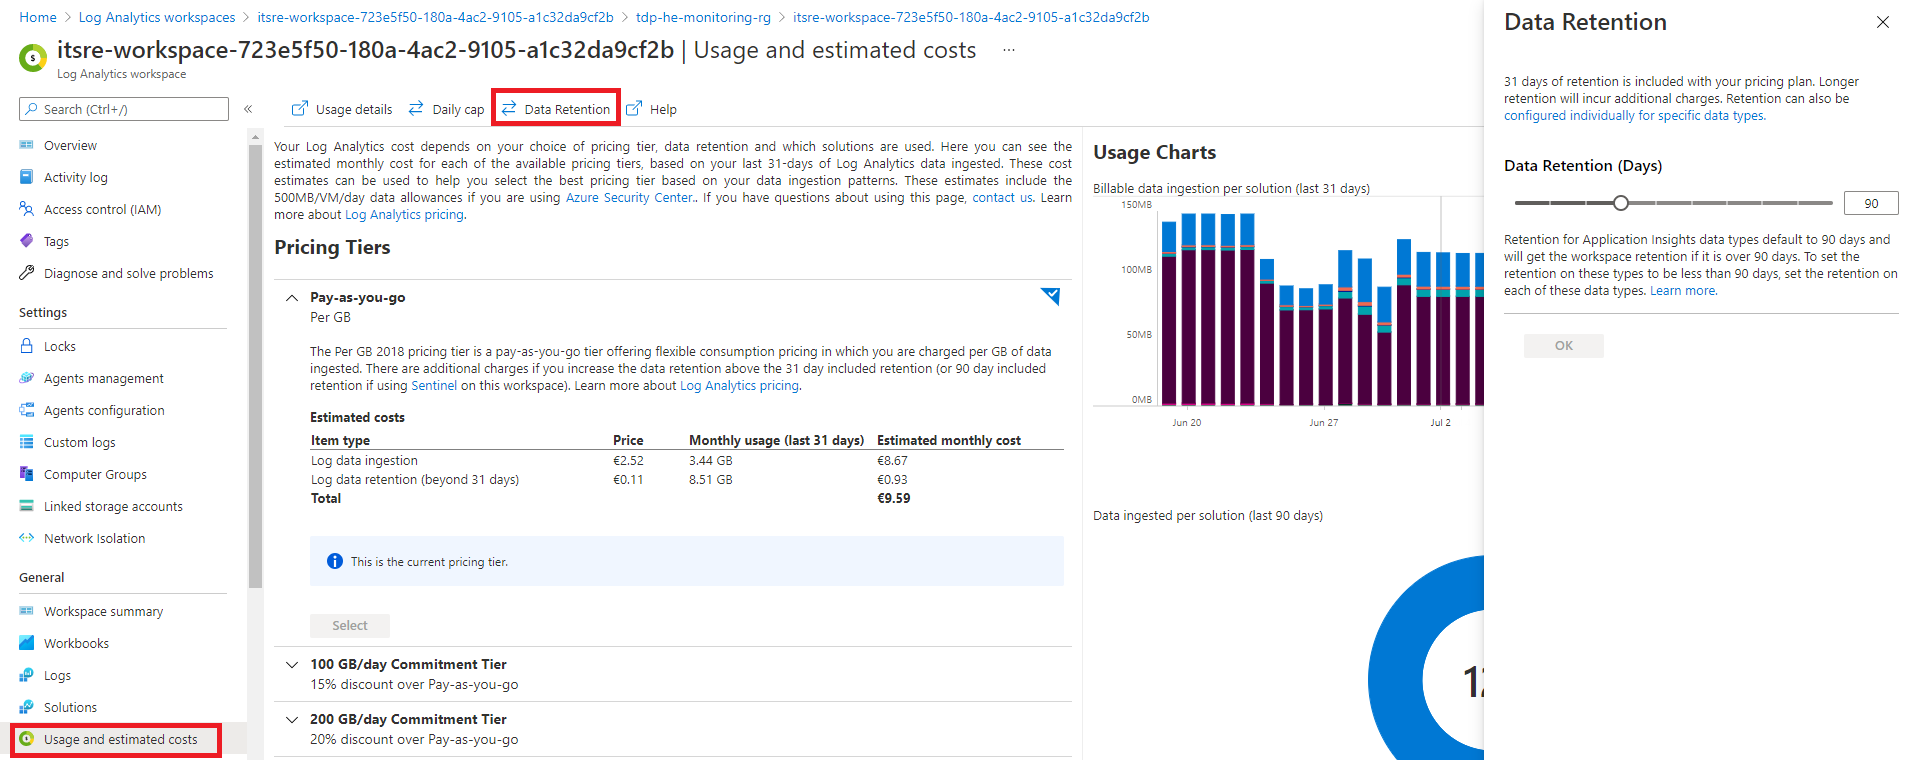 Tracking Azure log analytics costs